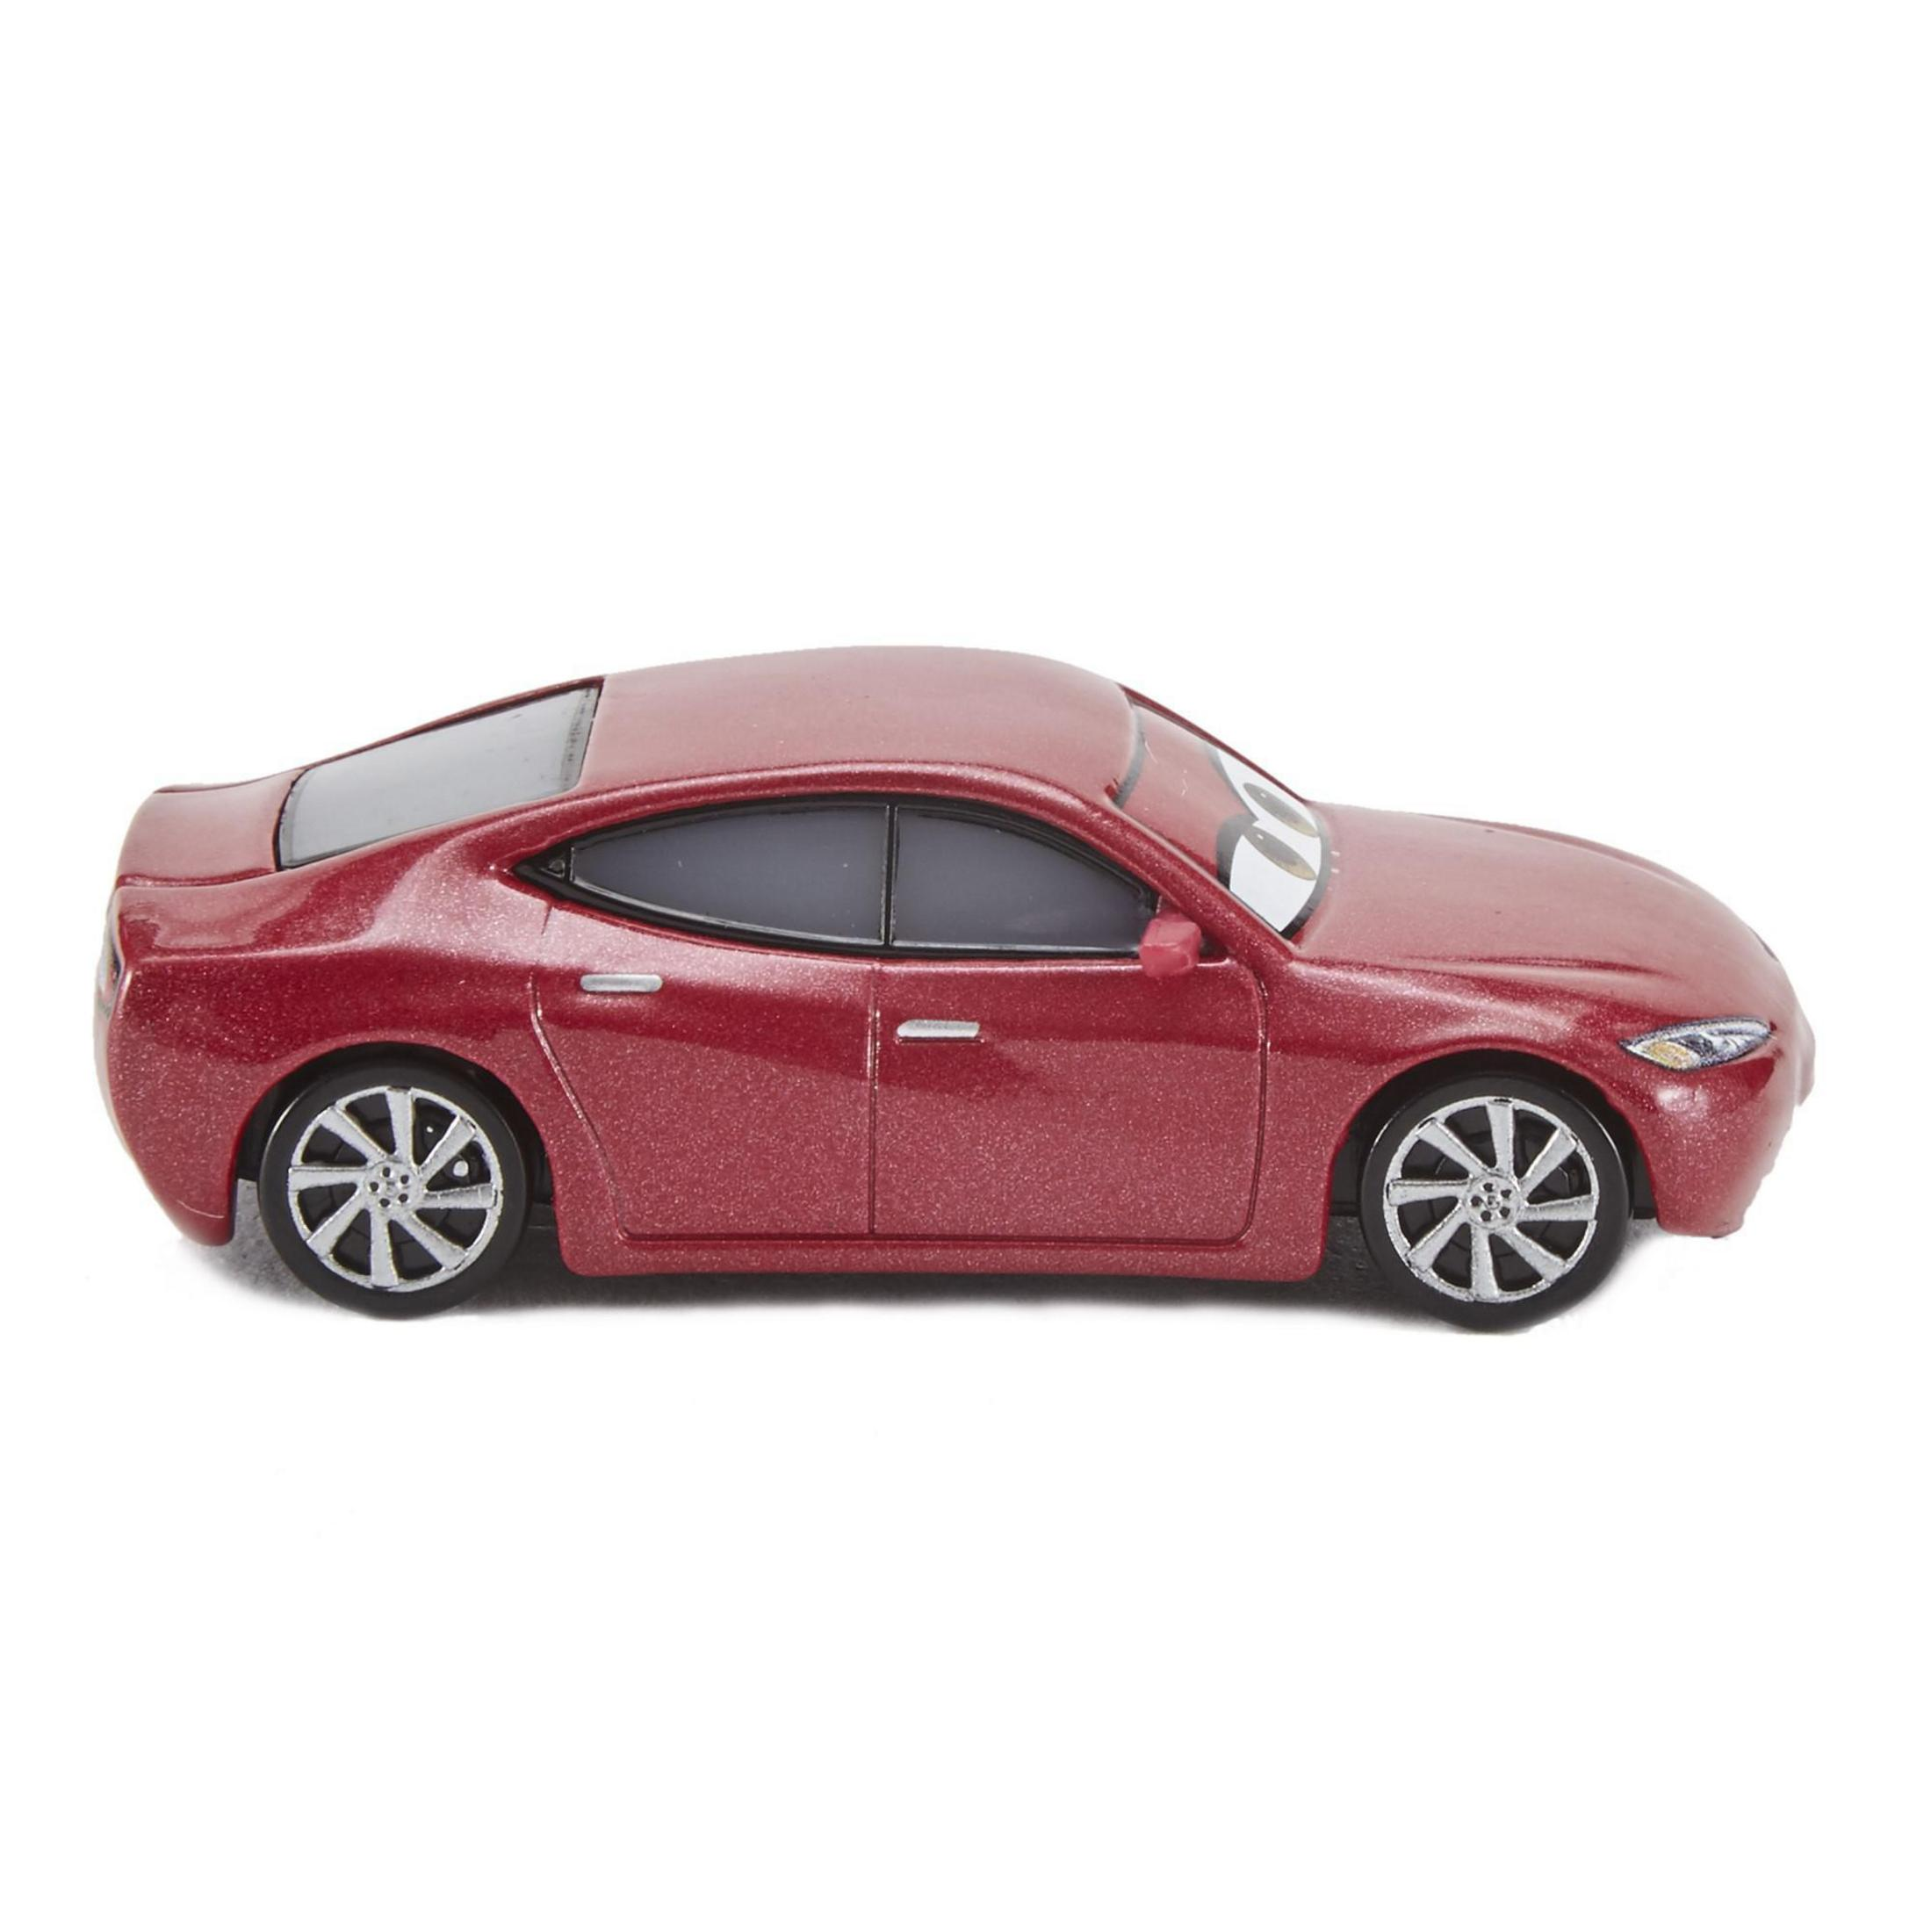 CARS GXG37 DIE-CAST CHARACTER Mehrfarbig SORT FAHRZEUG Spielzeugauto